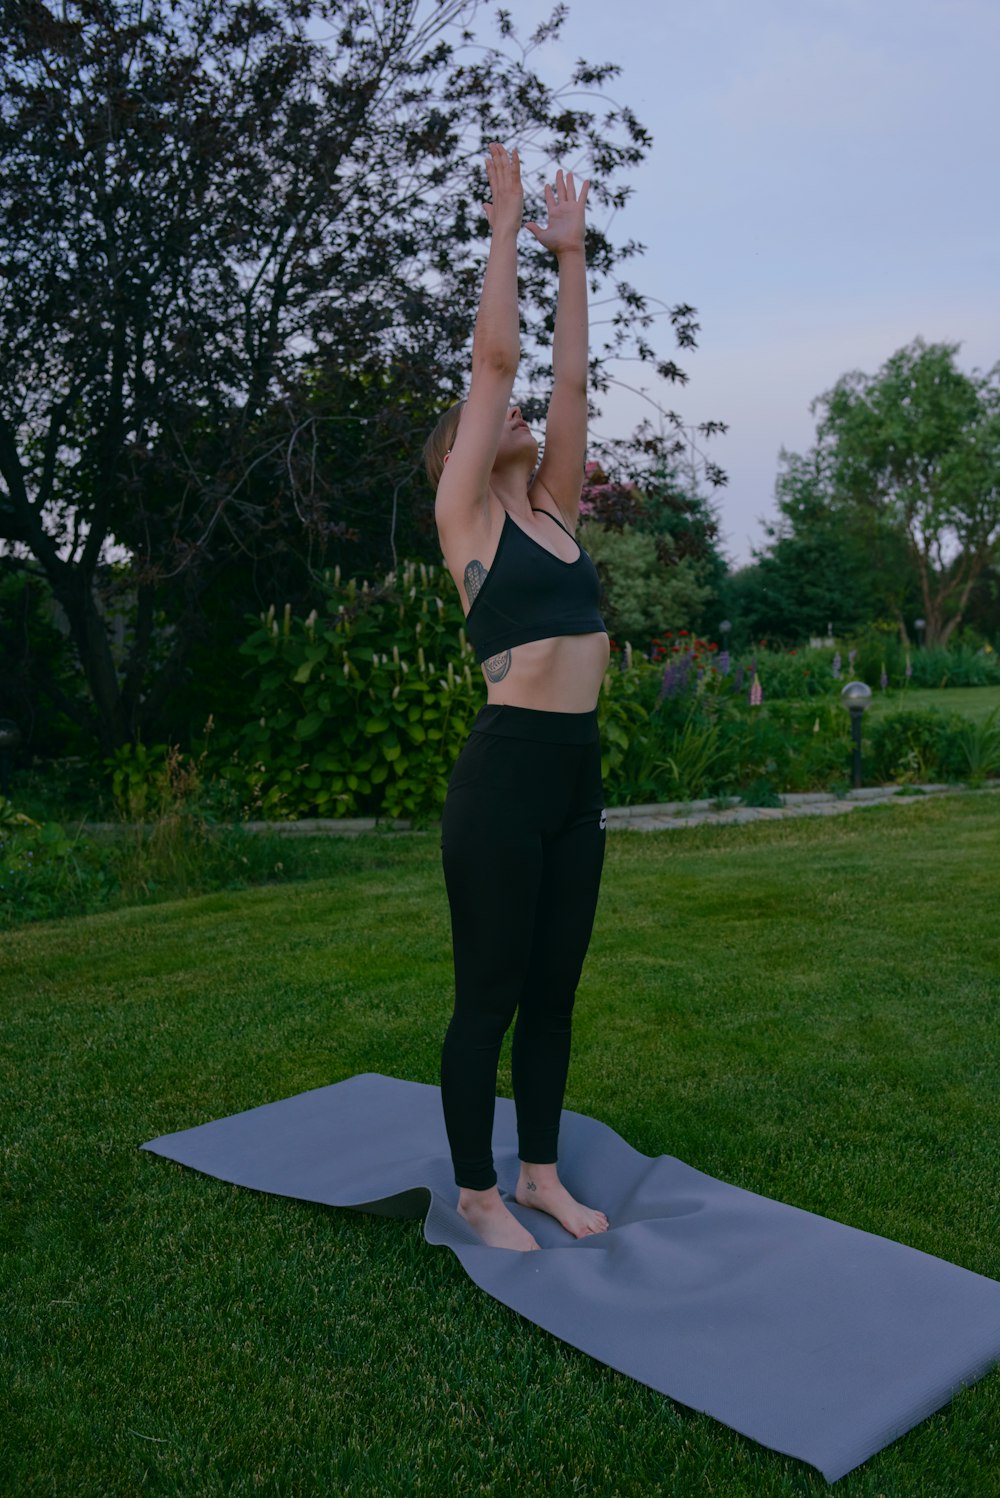 a woman doing a yoga pose on a yoga mat